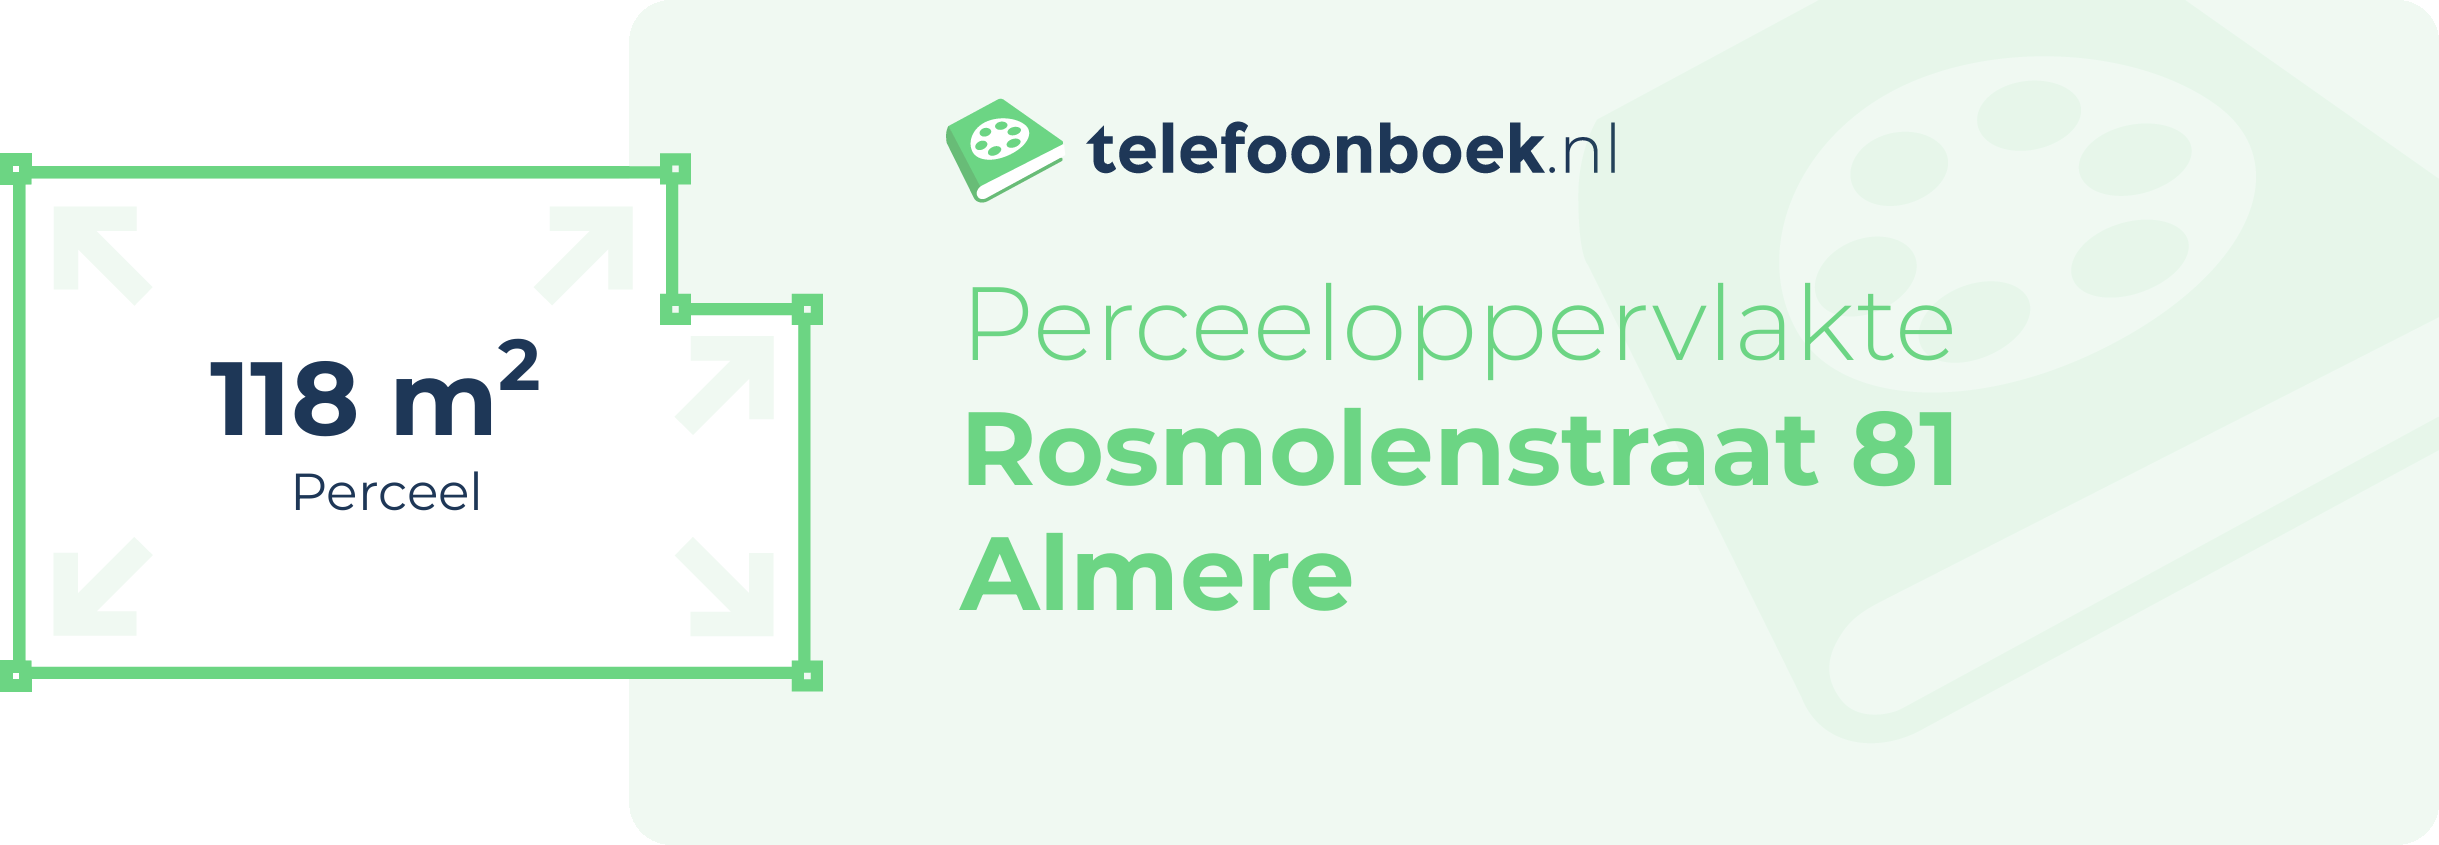 Perceeloppervlakte Rosmolenstraat 81 Almere